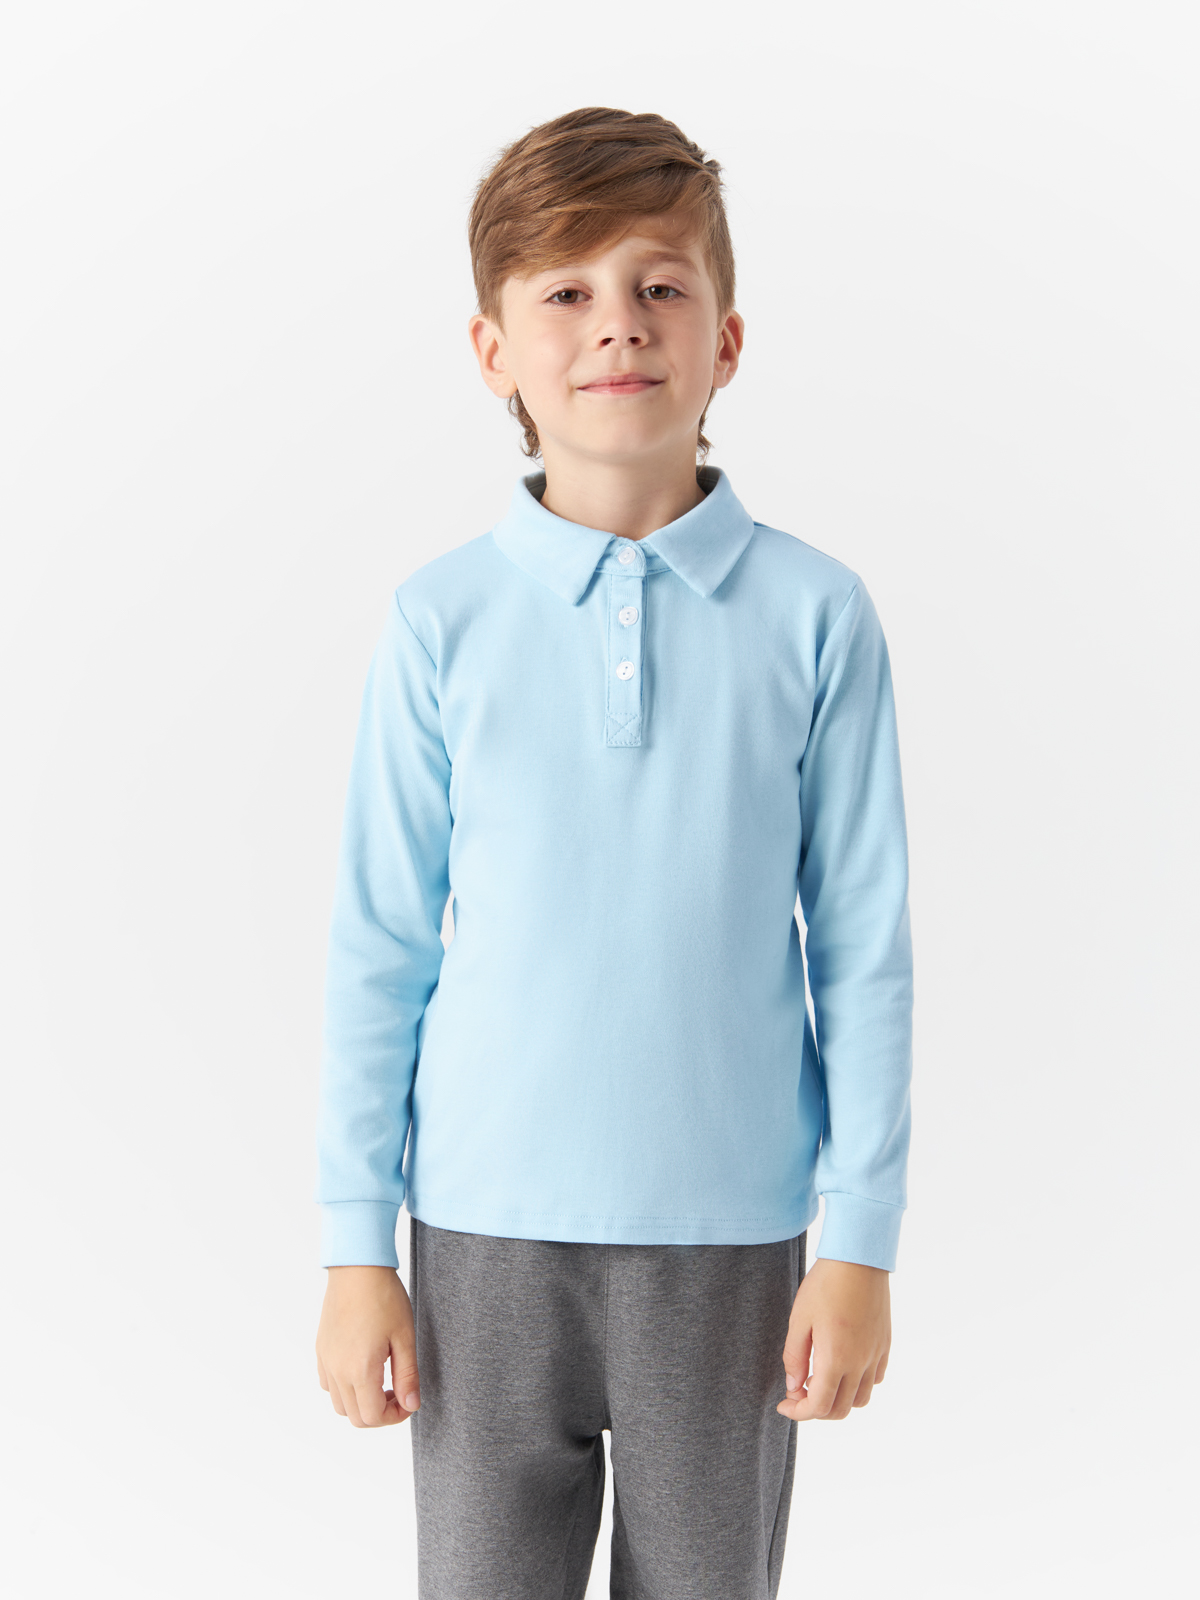 Рубашка Yiwu Xflot Supply Chain детская, BS-8lightblue, размер 110 см